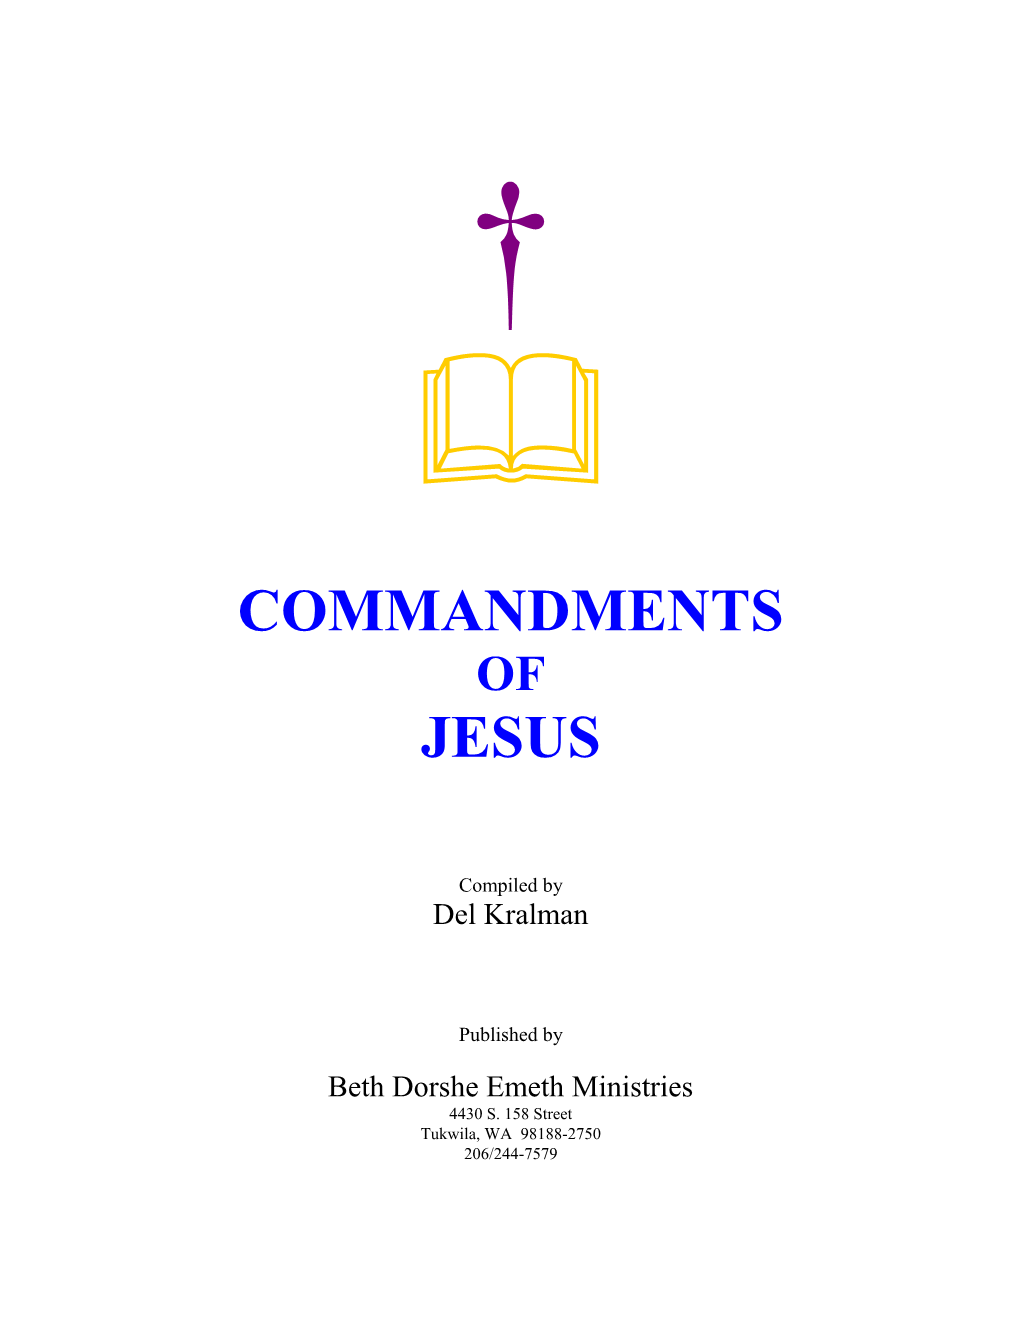 Beth Dorshe Emeth Ministries